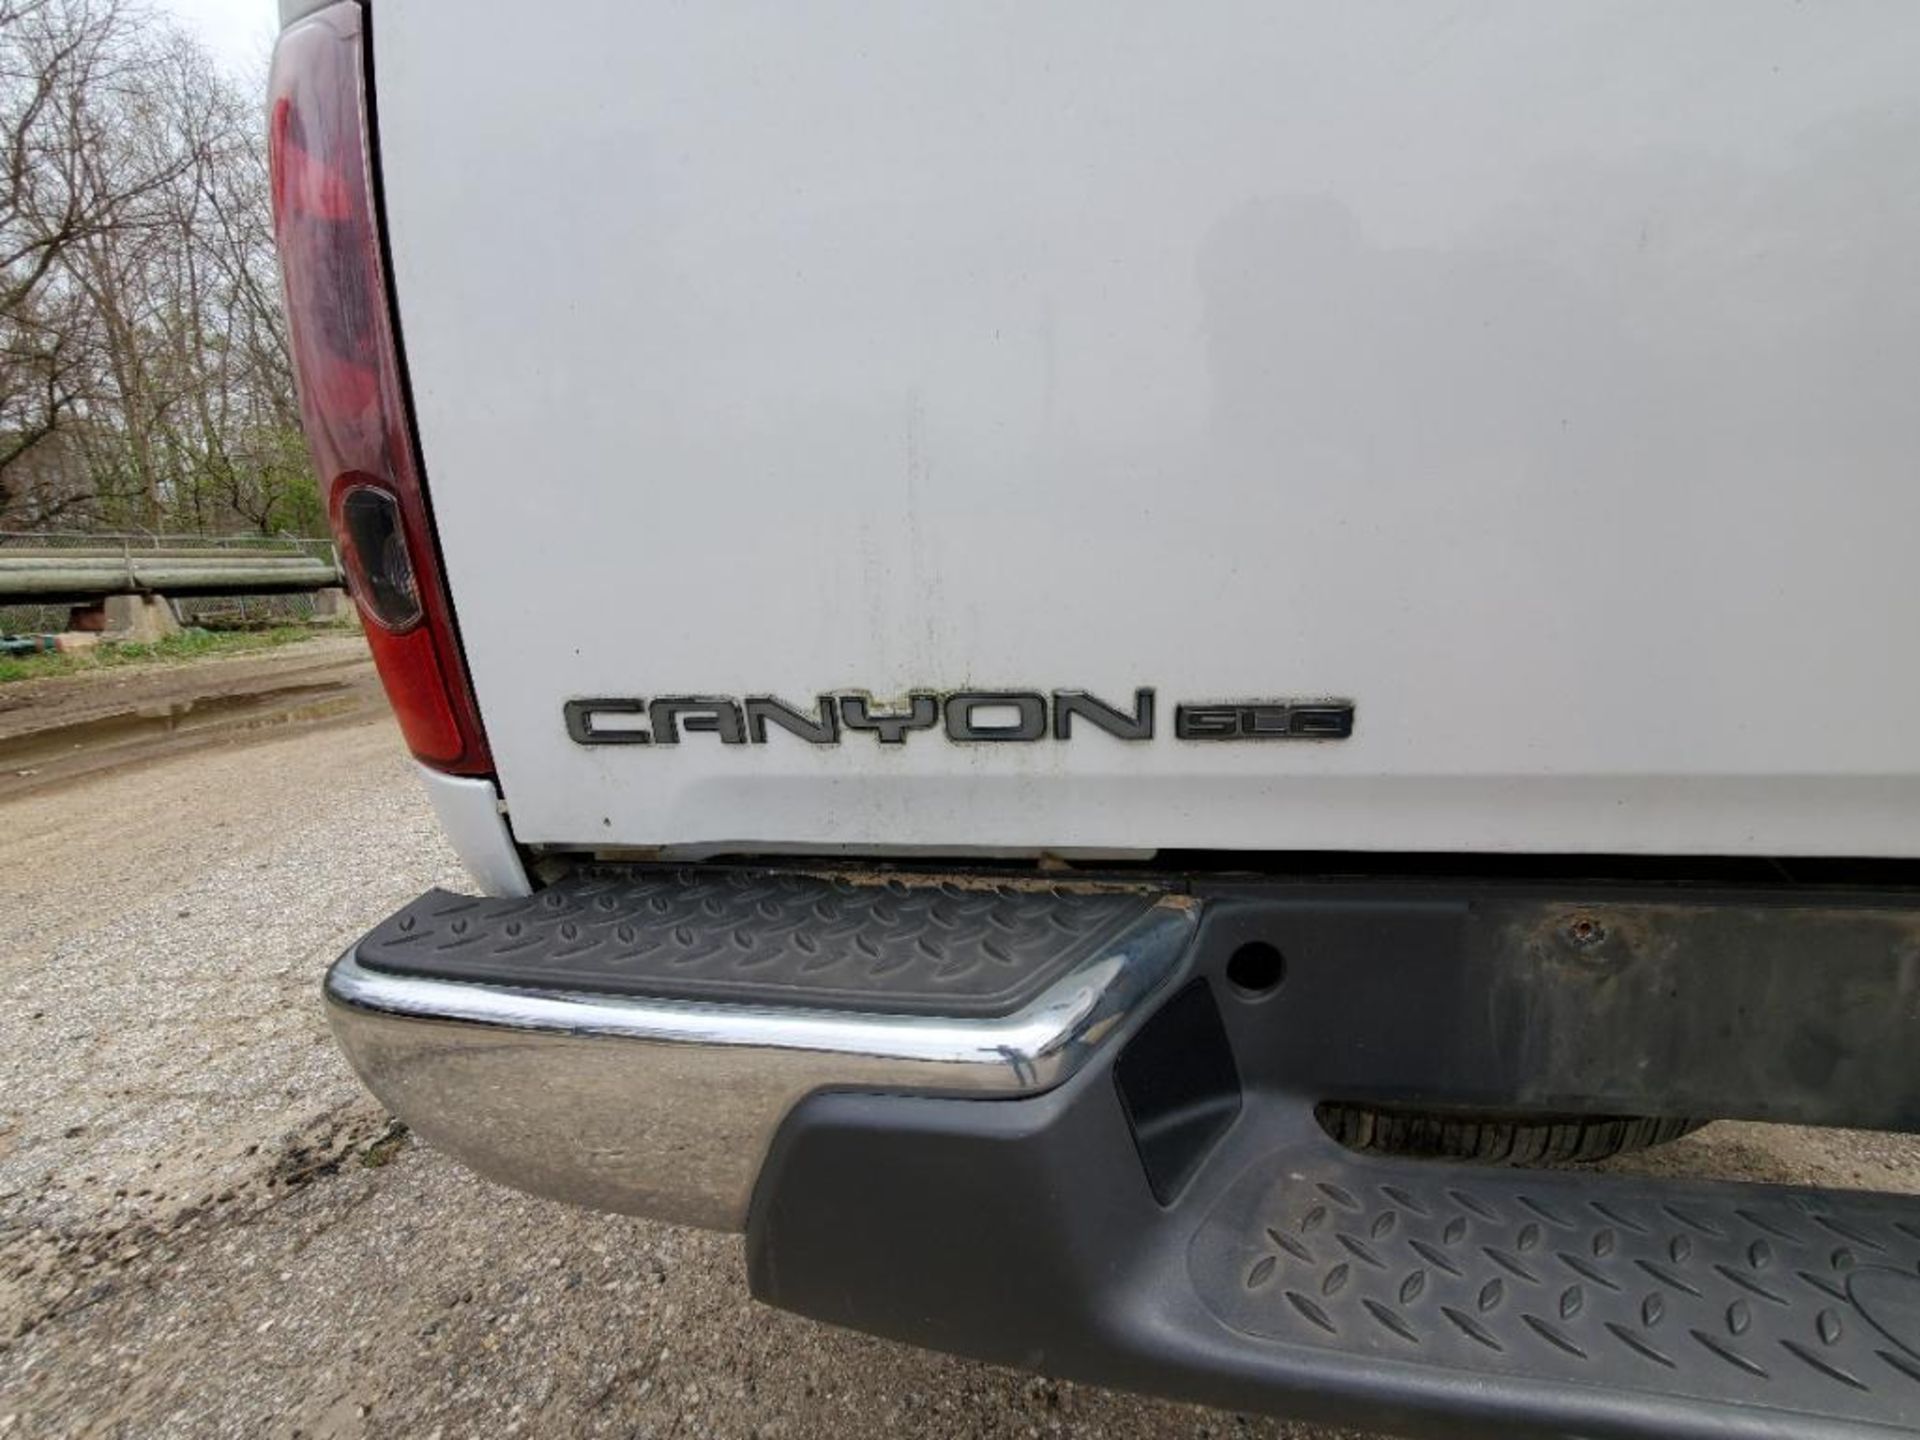 2009 GMC Canyon Pickup Truck, VIN # 1GTCs19e798144364 - Image 9 of 42